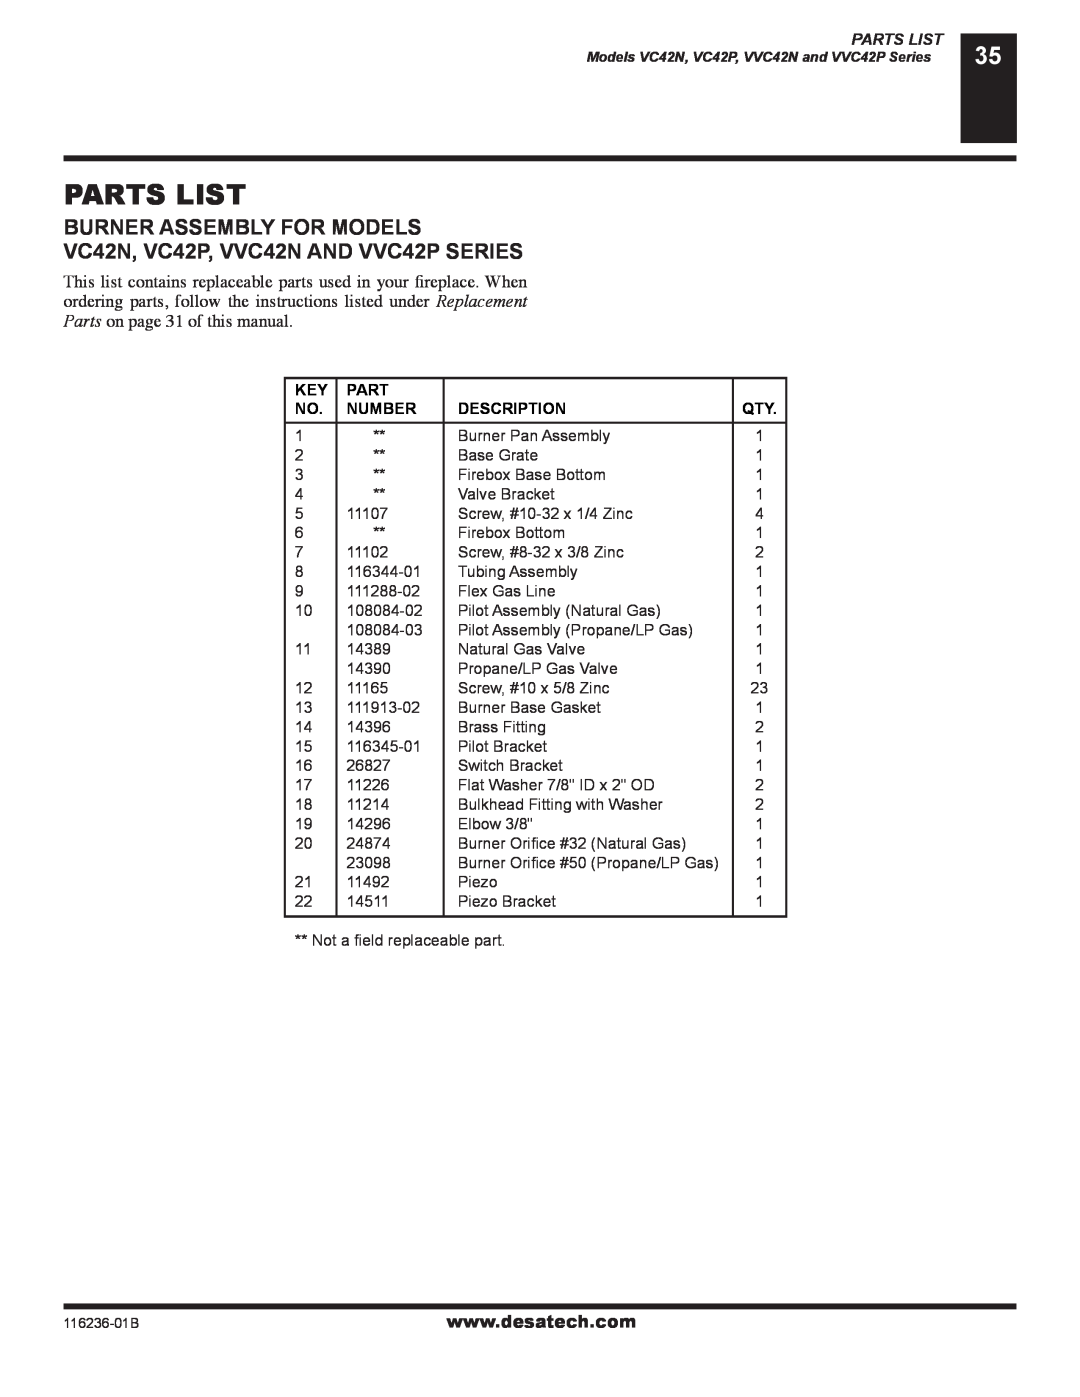 Desa (V)VC42N SERIES Parts List, Burner Assembly For Models, VC42N, VC42P, VVC42N AND VVC42P SERIES, Burner Pan Assembly 